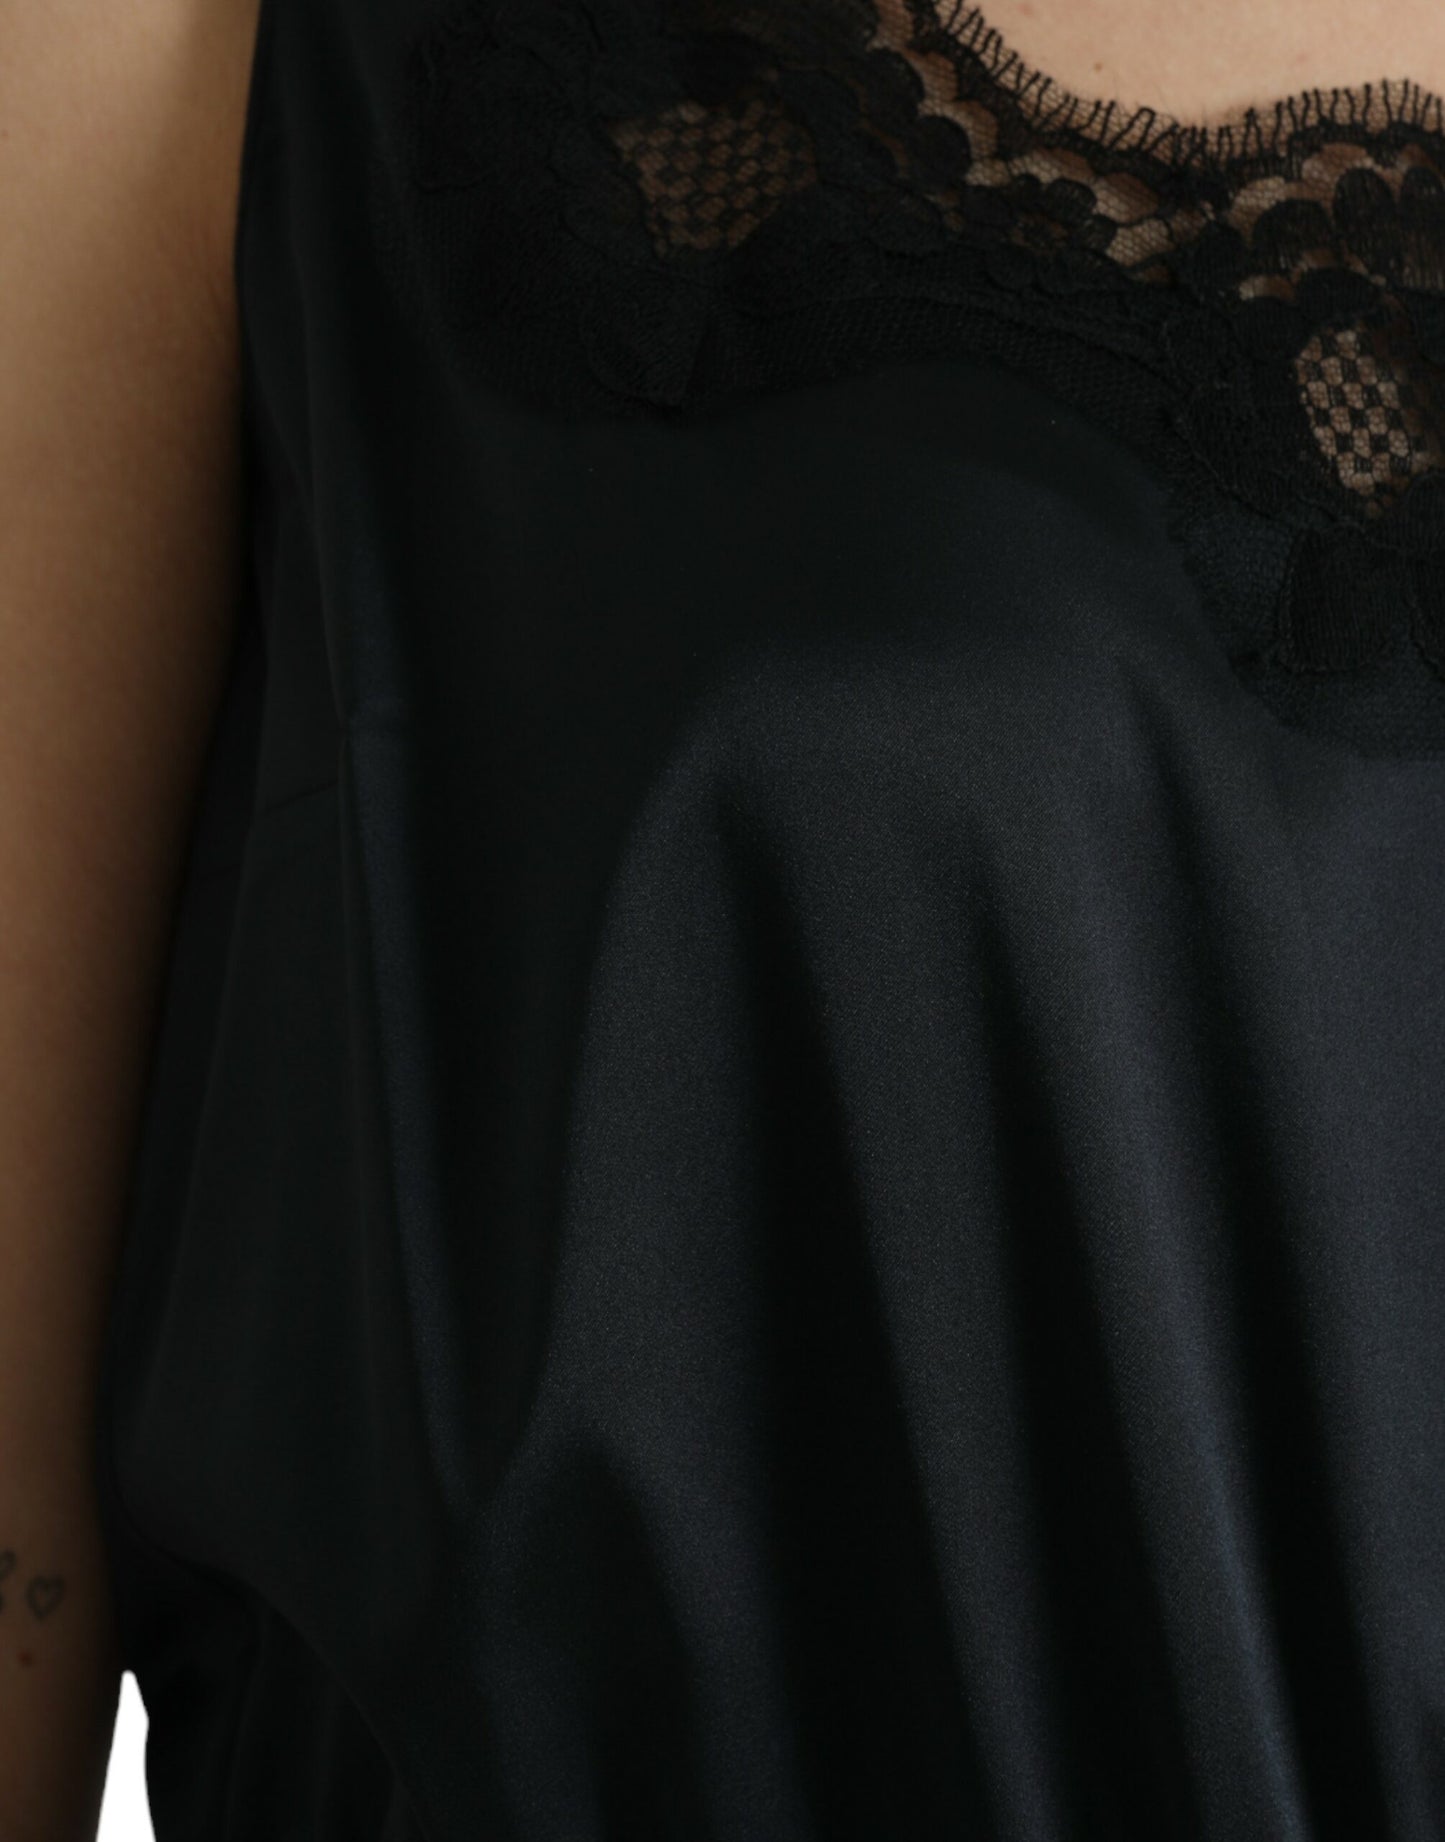 Dolce & Gabbana Black Polyester Lace Trim Sheath Midi Dress